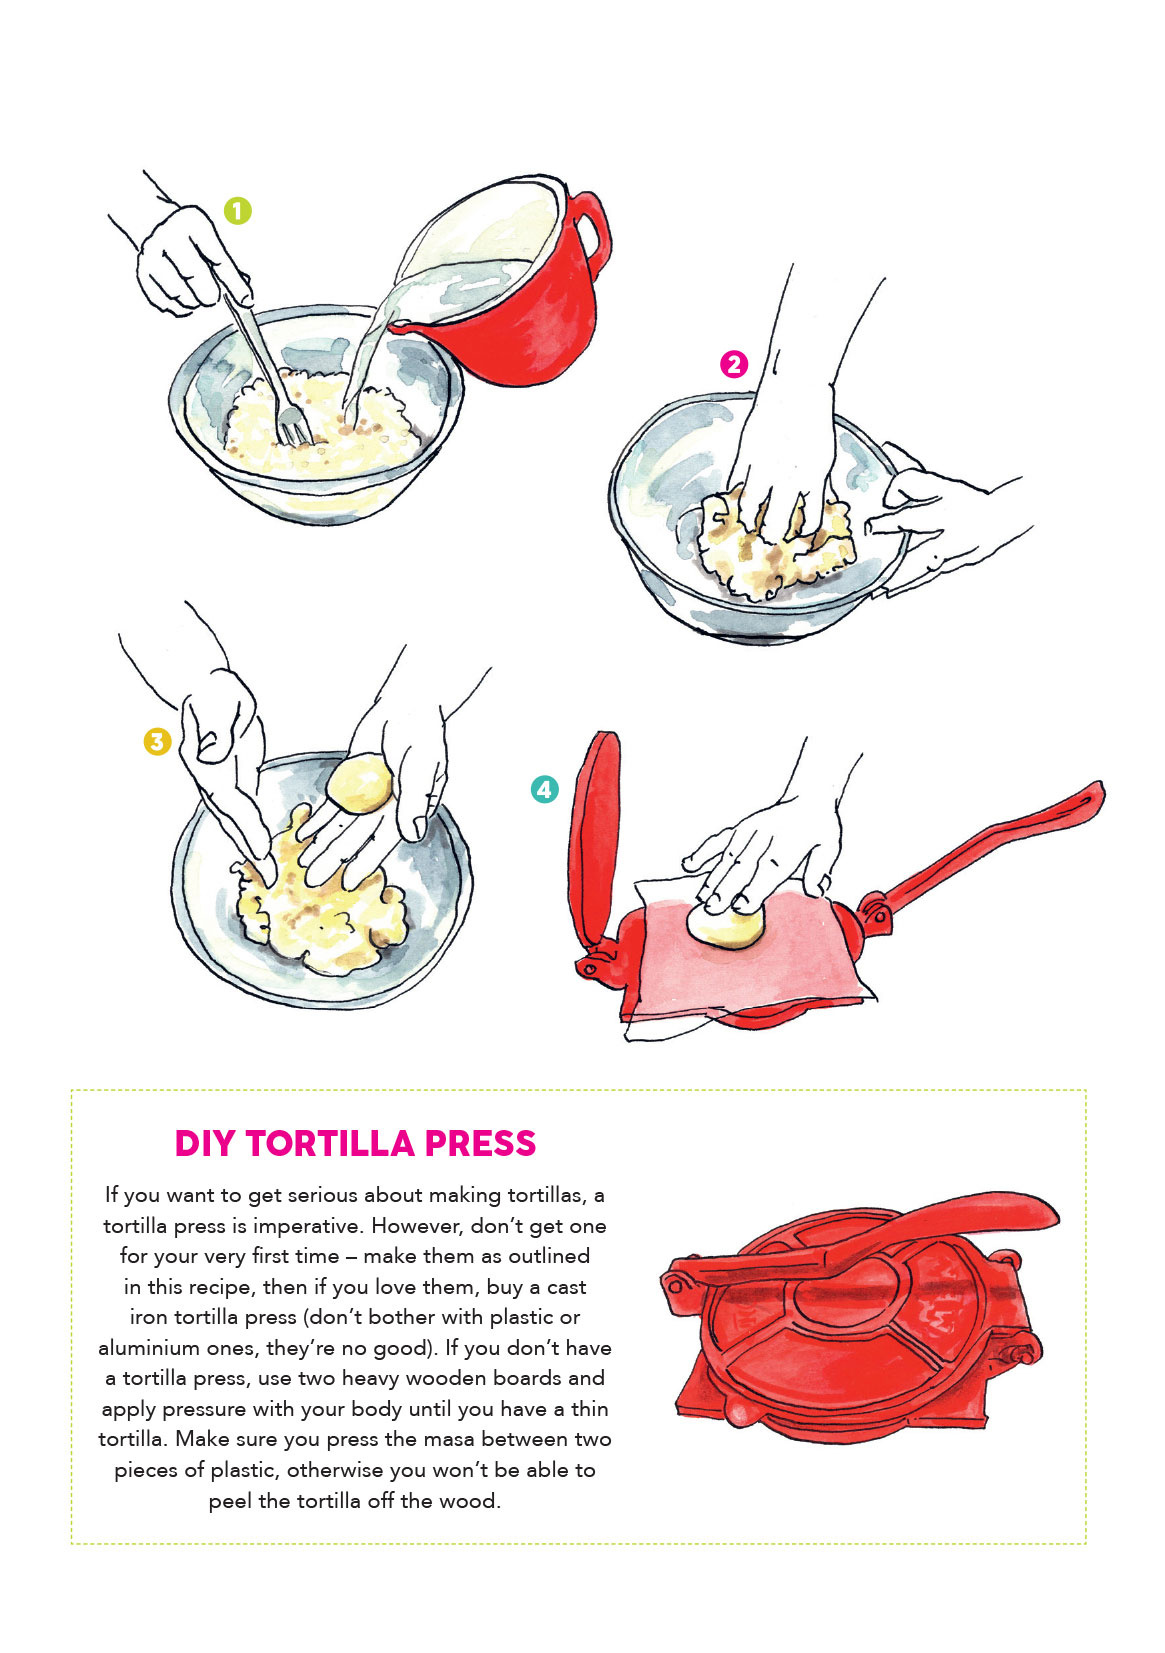 Image of tortillas steps 1